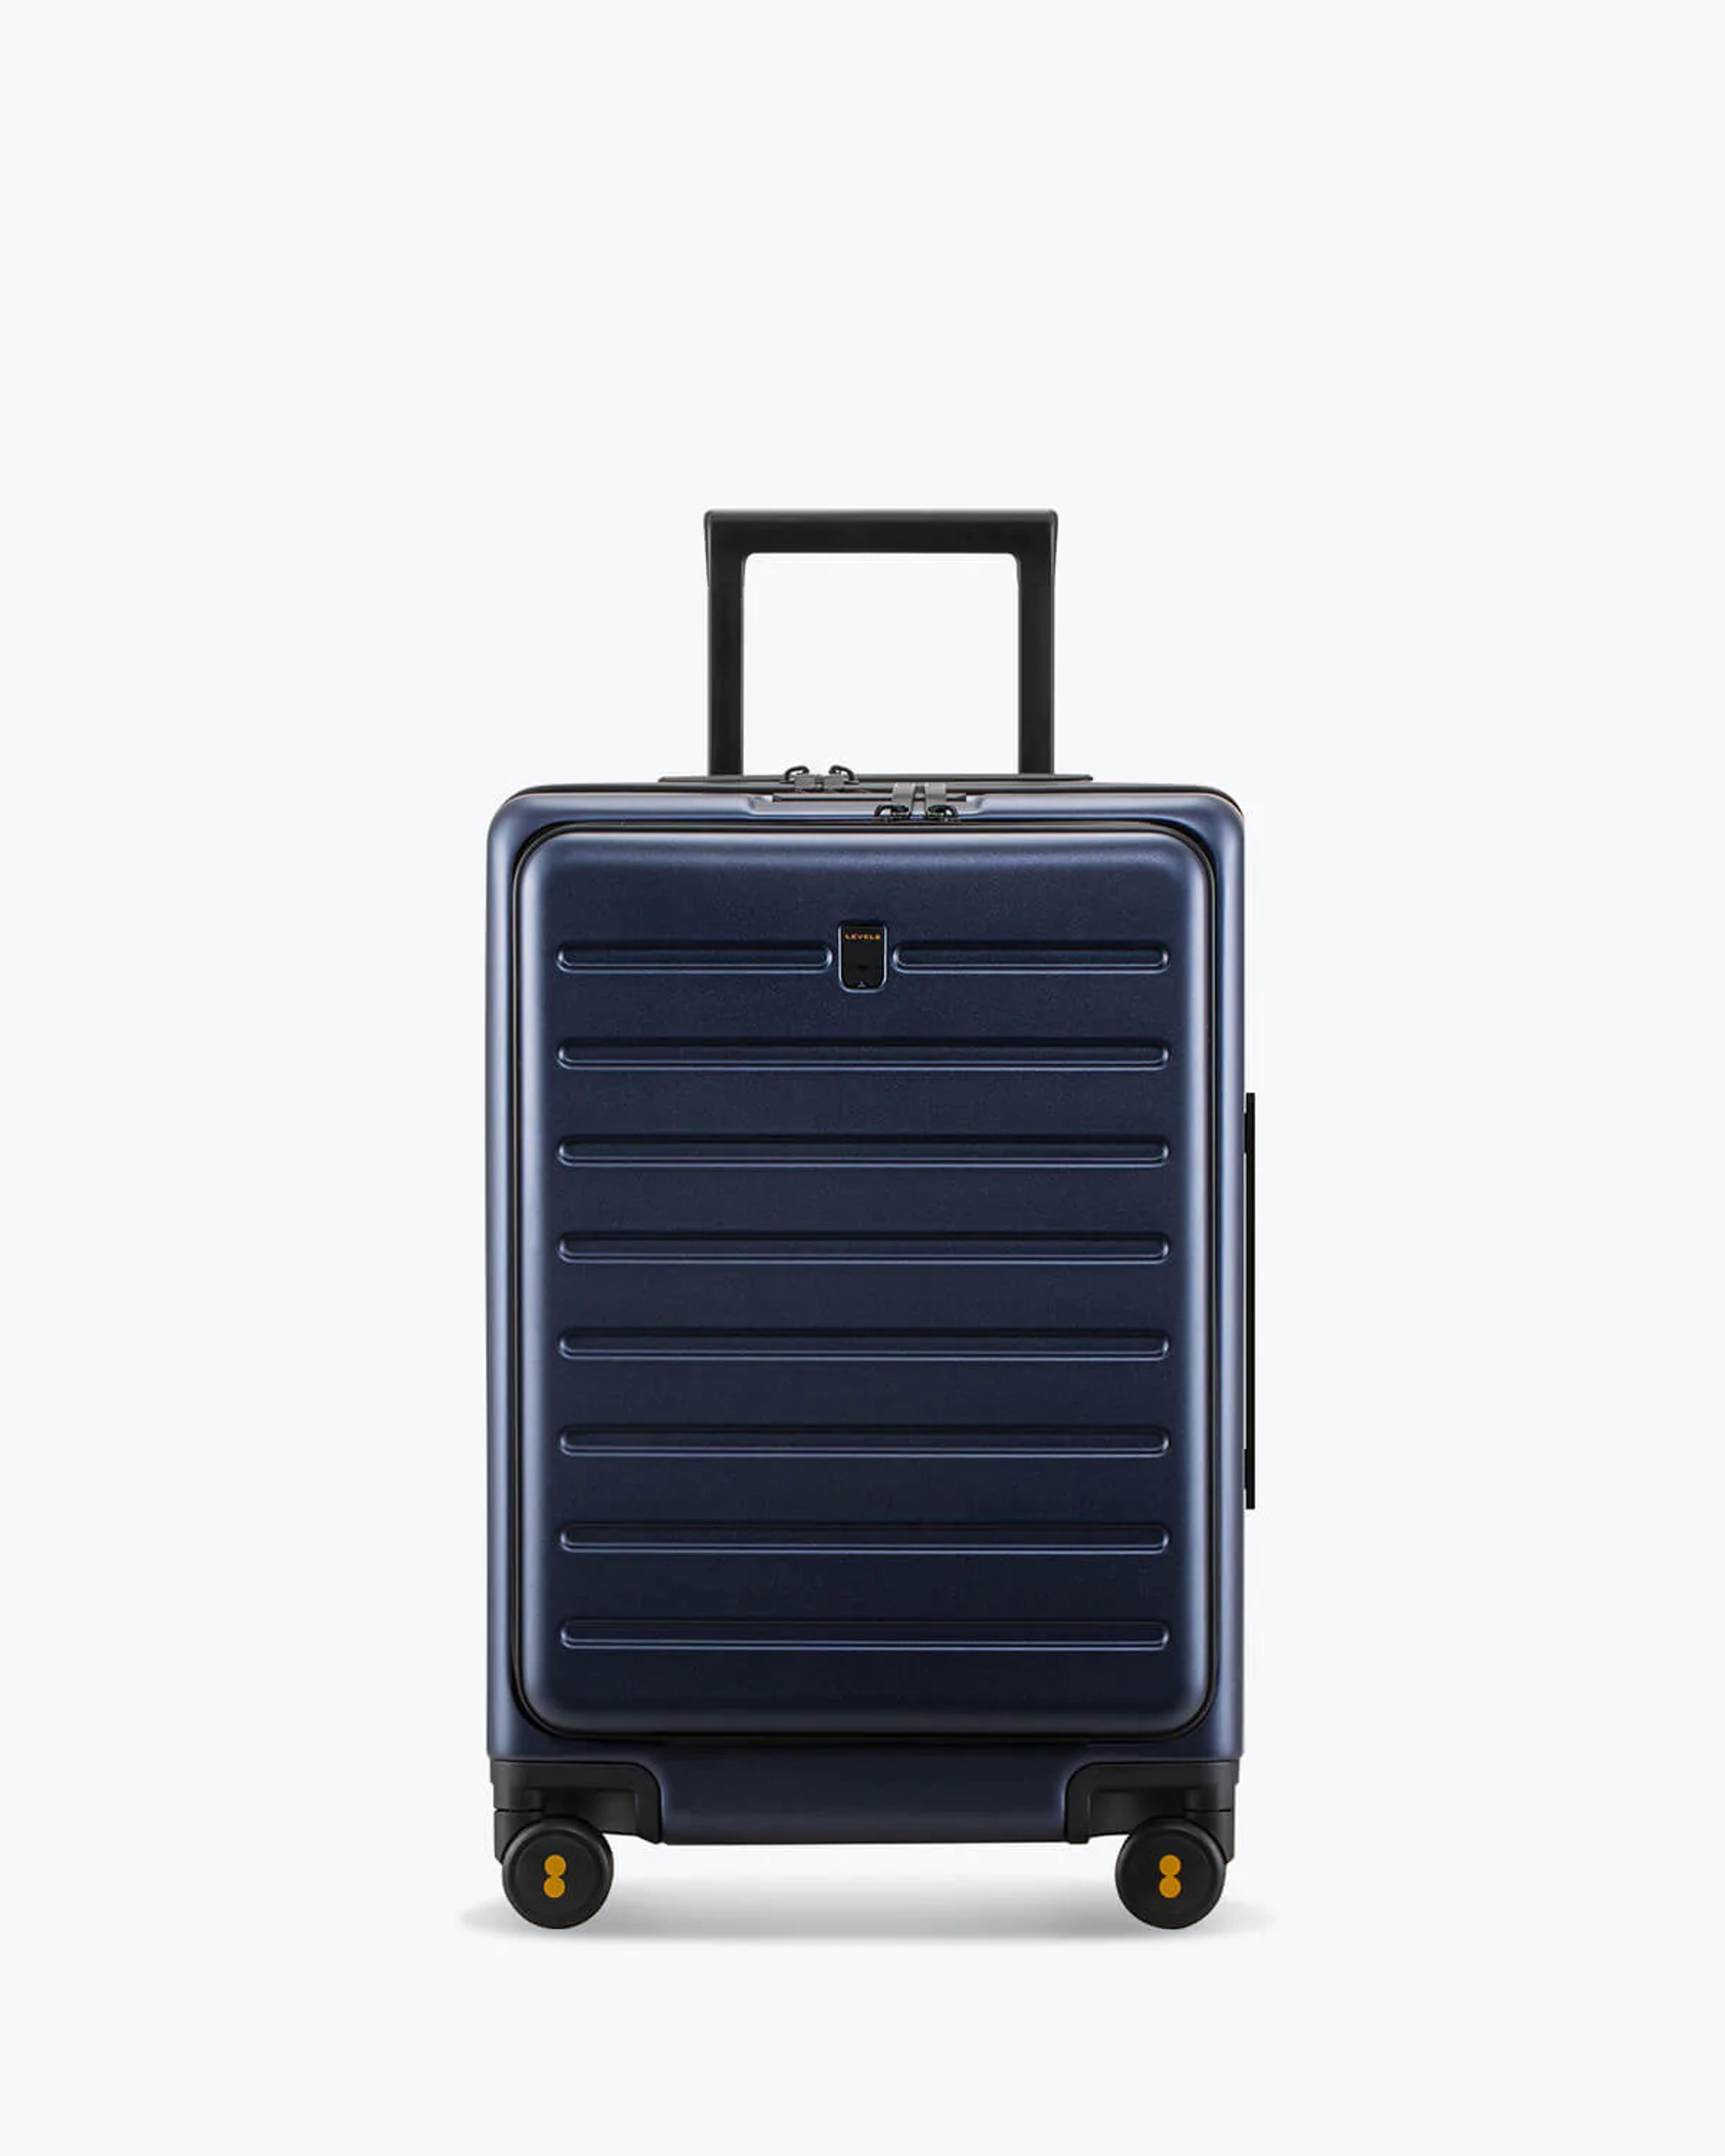 Laptop Carry On Luggage With Laptop Pocket, Hardside Spinner | LEVEL8